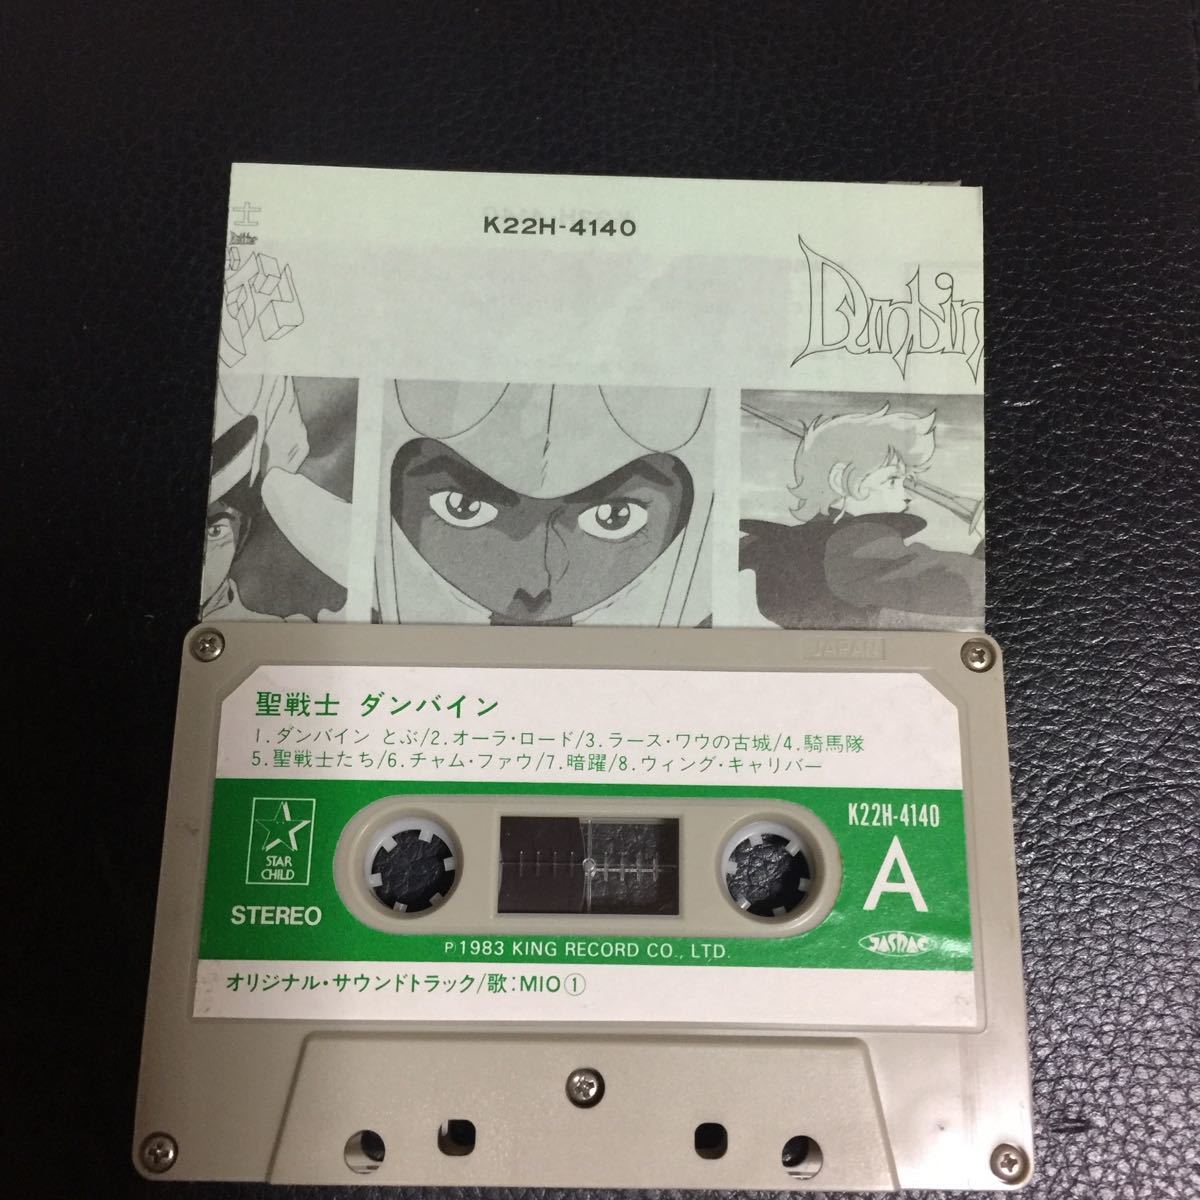  Seisenshi Dambain BGM compilation domestic record cassette tape #